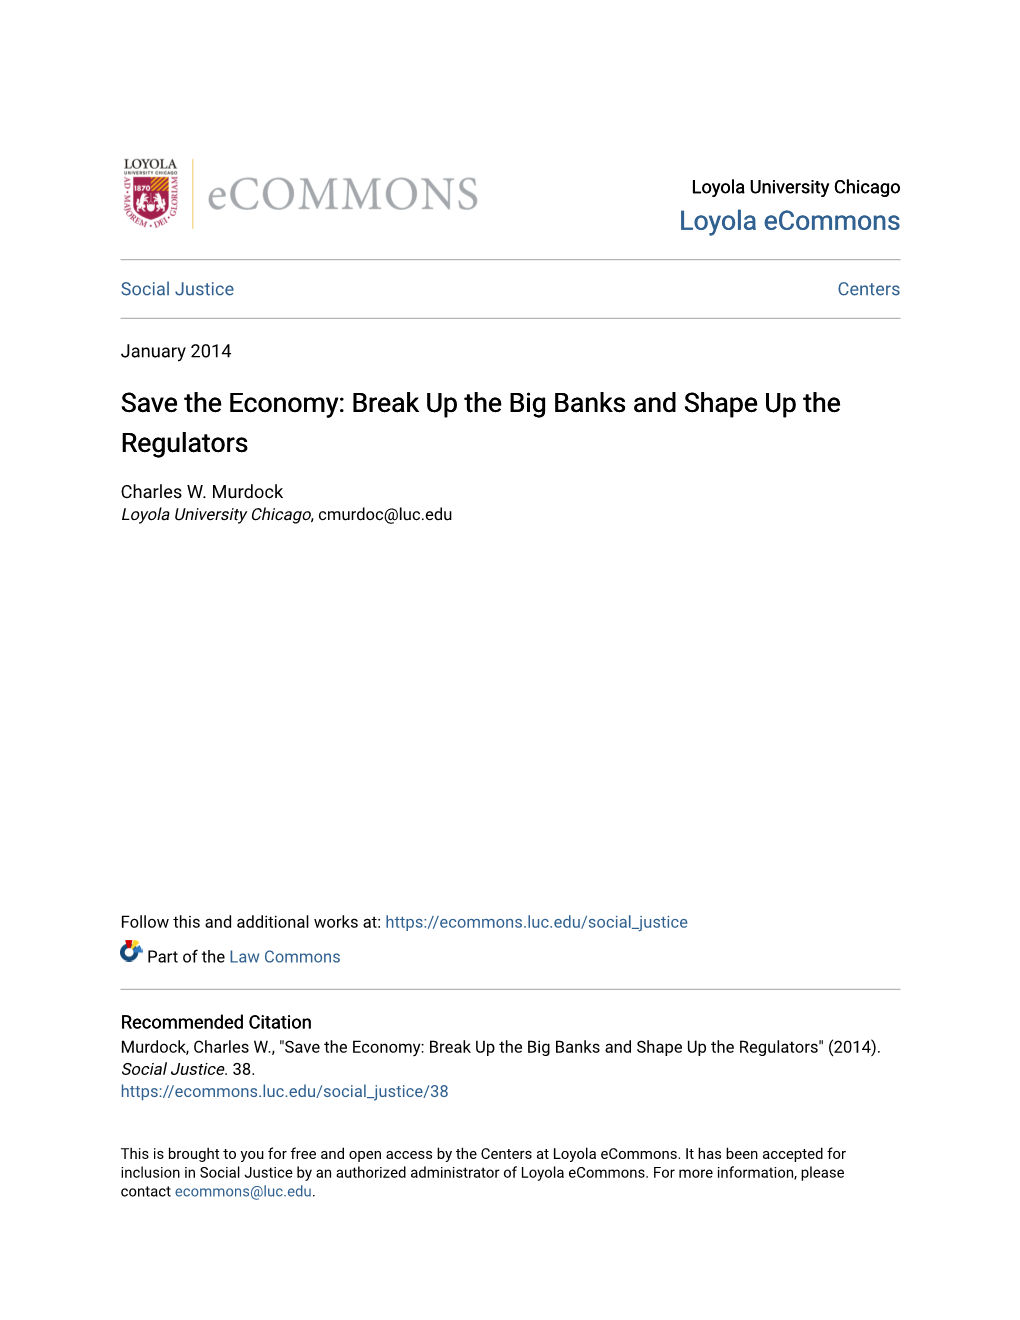 Break up the Big Banks and Shape up the Regulators